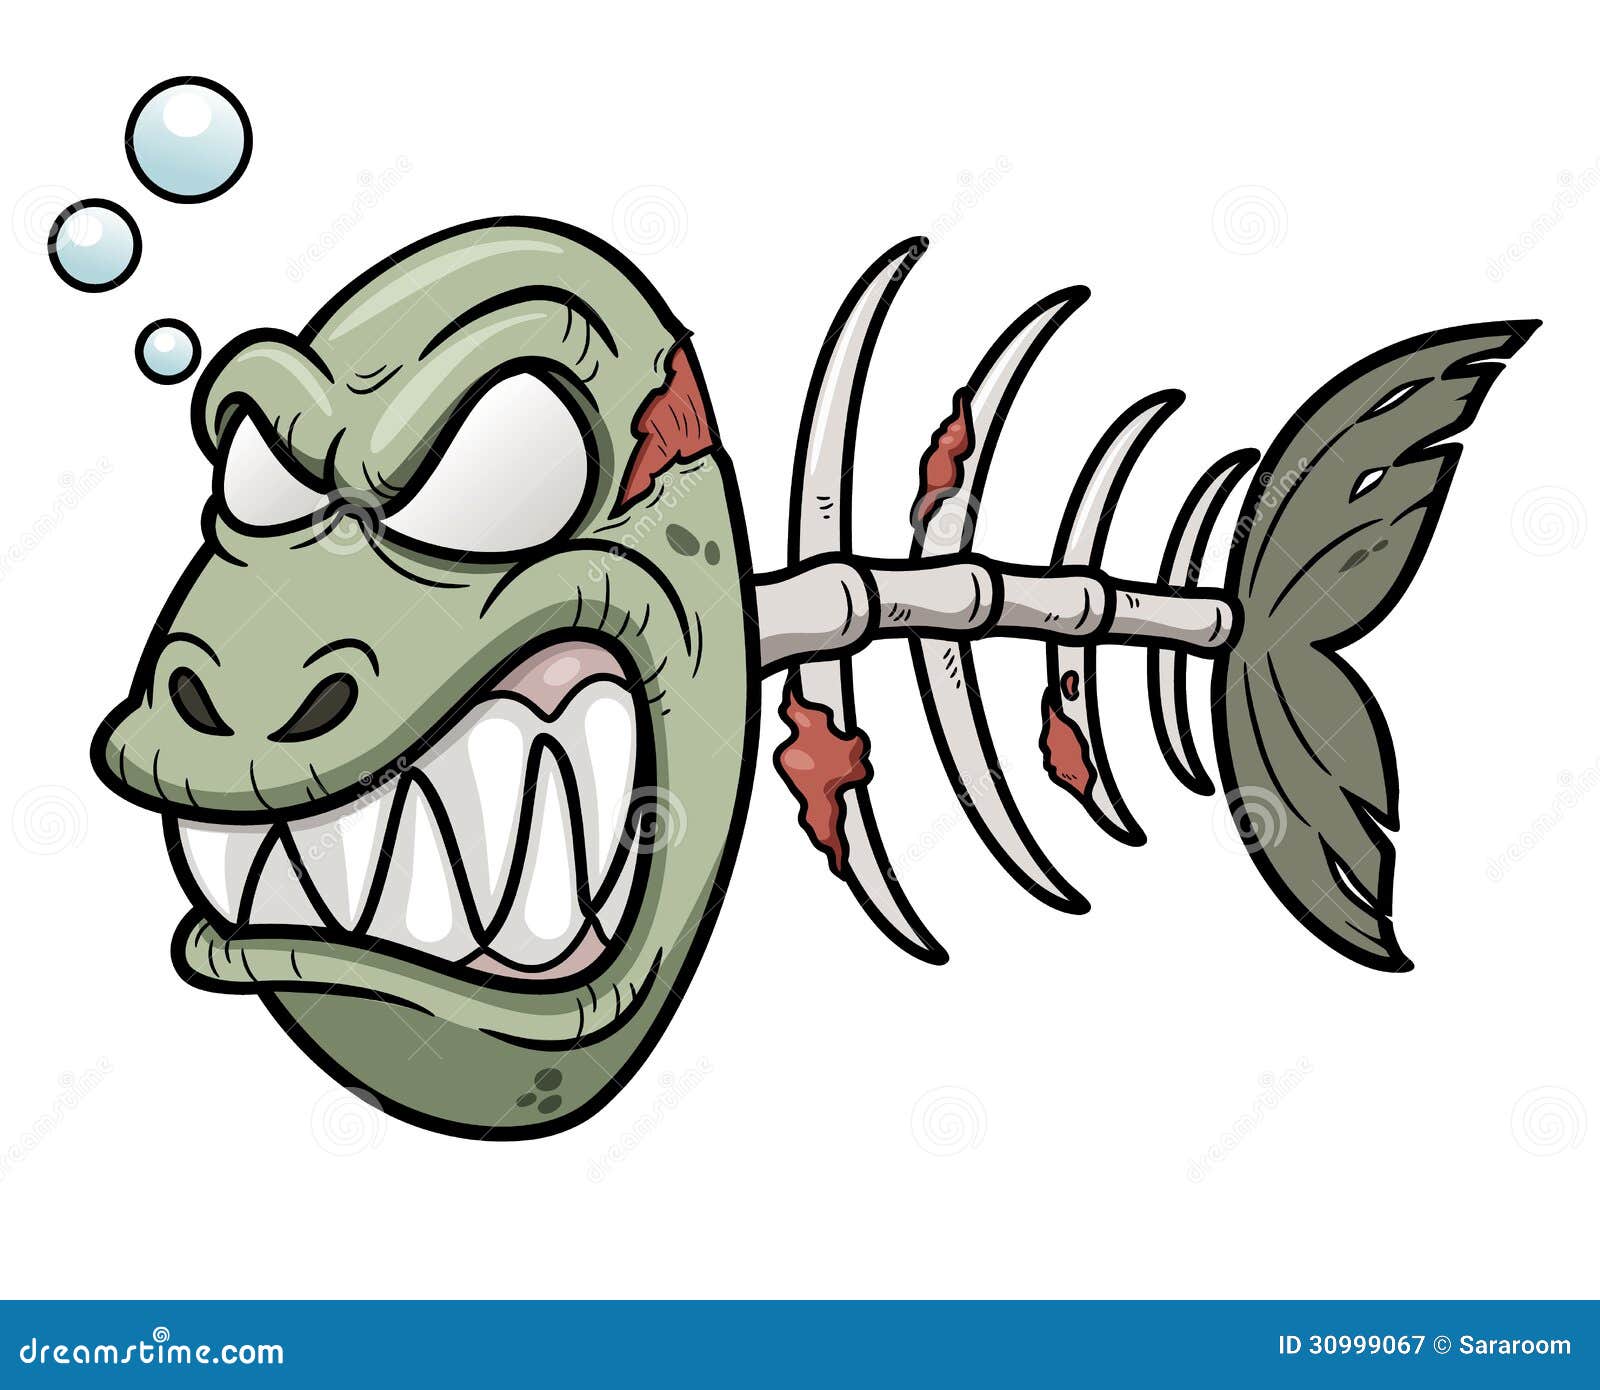 Cartoon zombie fish stock vector. Illustration of zombie - 30999067